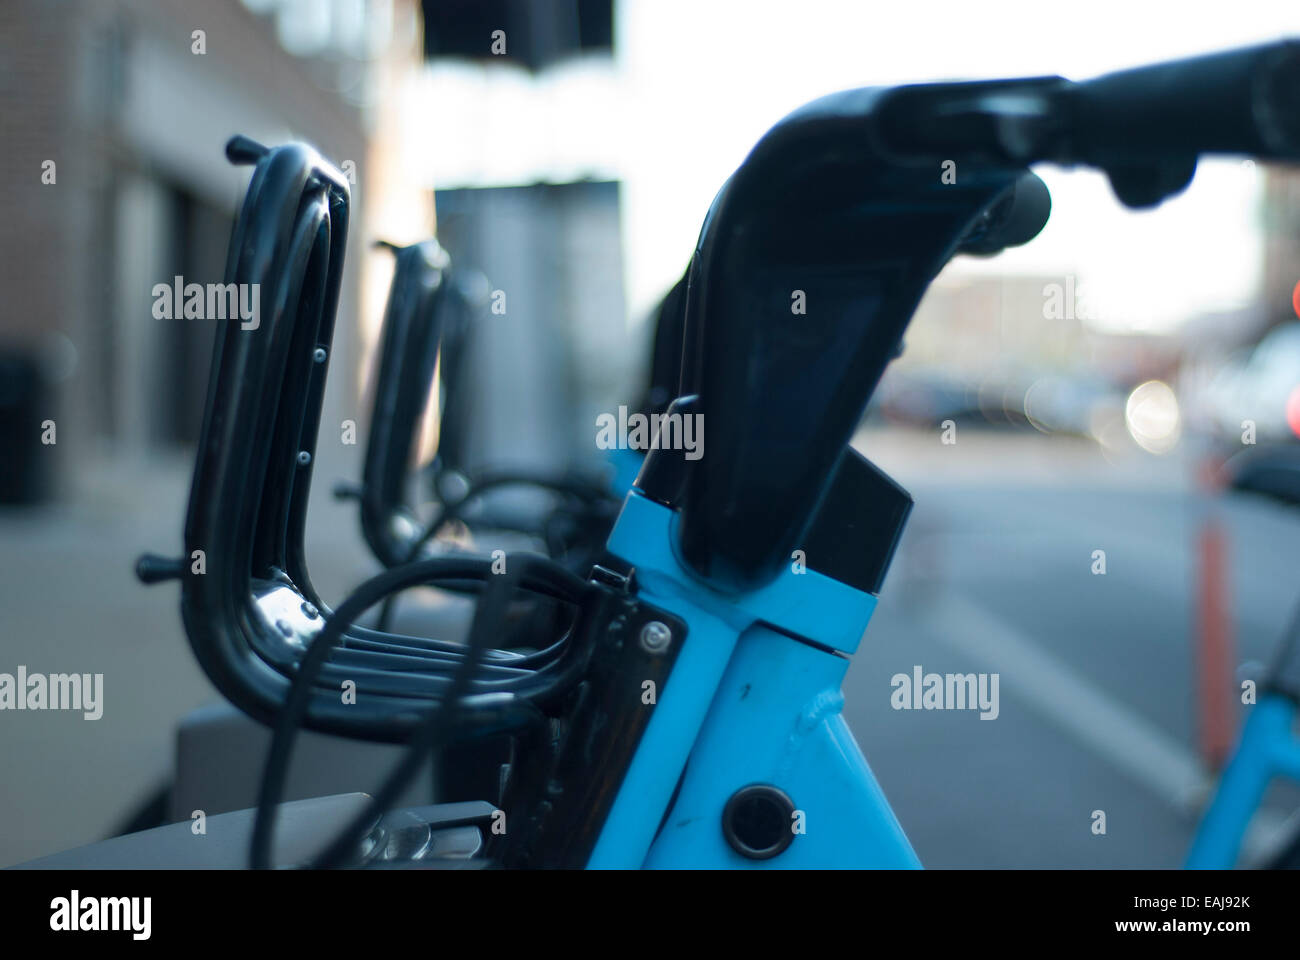 Bicycle Handles Stock Photo